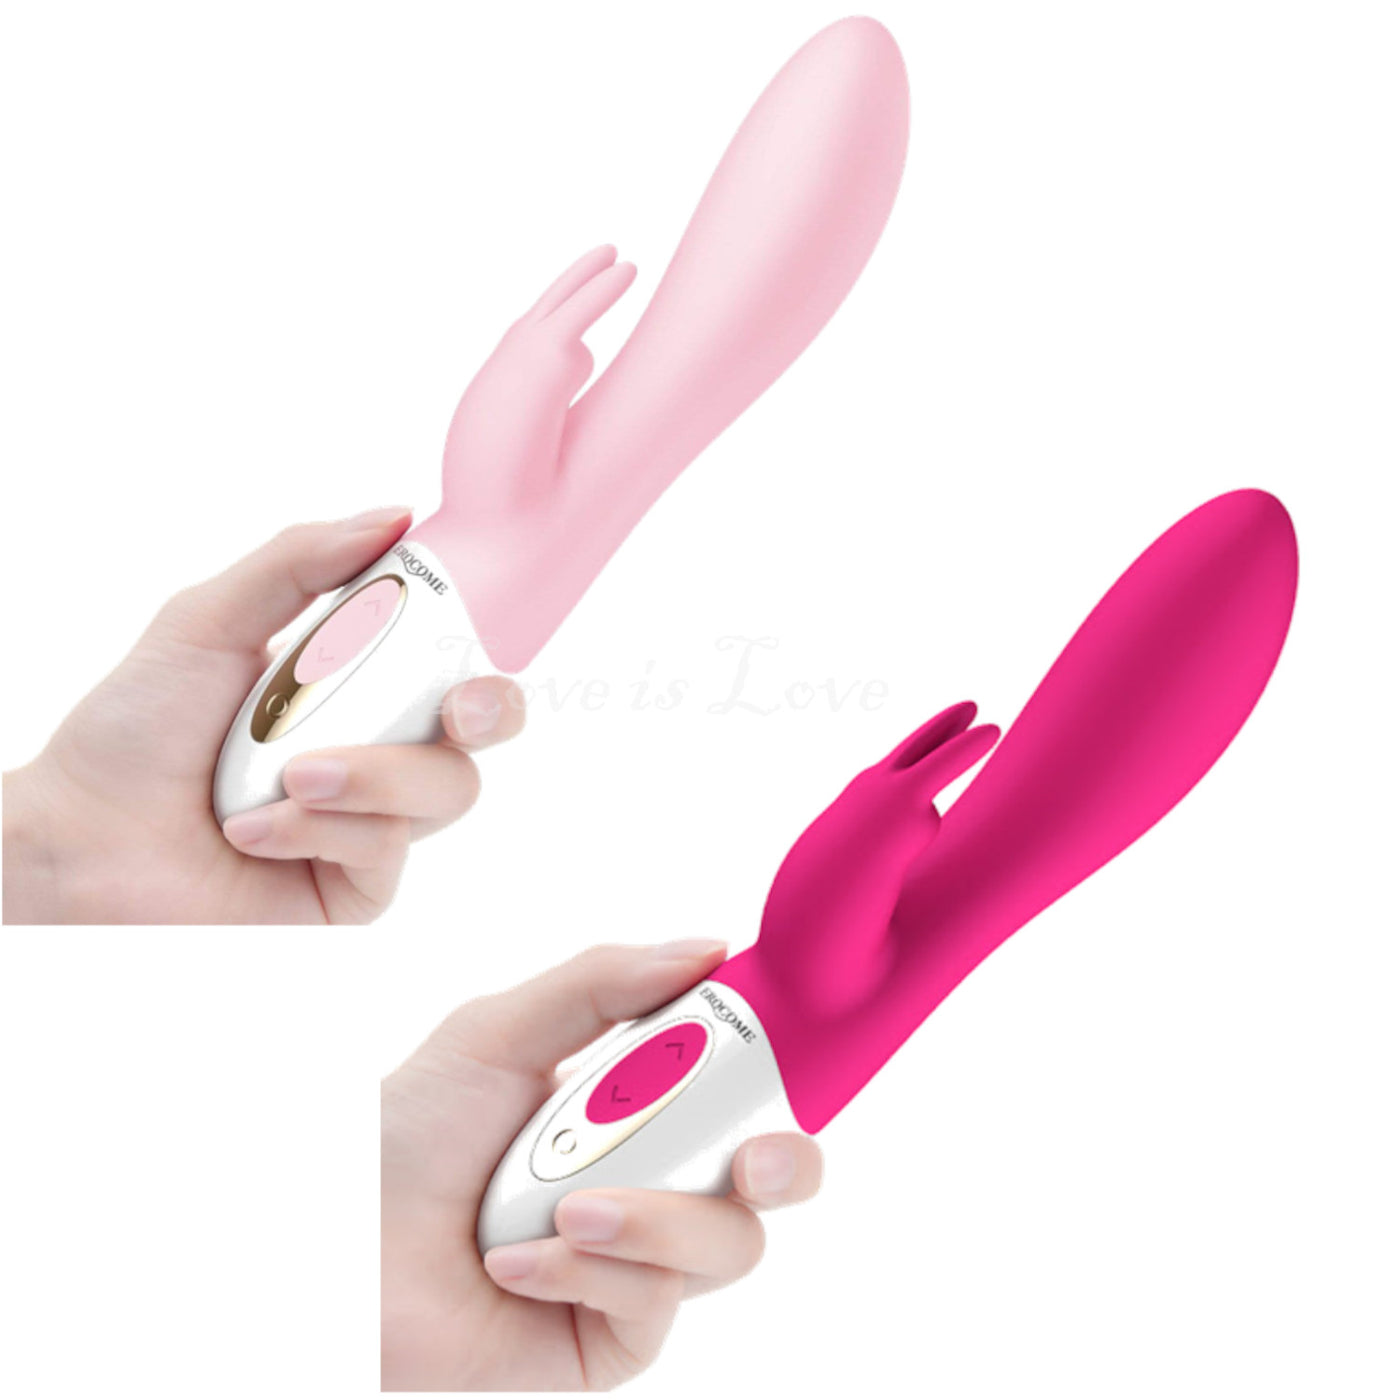 Hydra Dildo Porn - Erocome Hydra Heat Rotating Rabbit Vibrator Pink or Cerise â€“ Love is Love